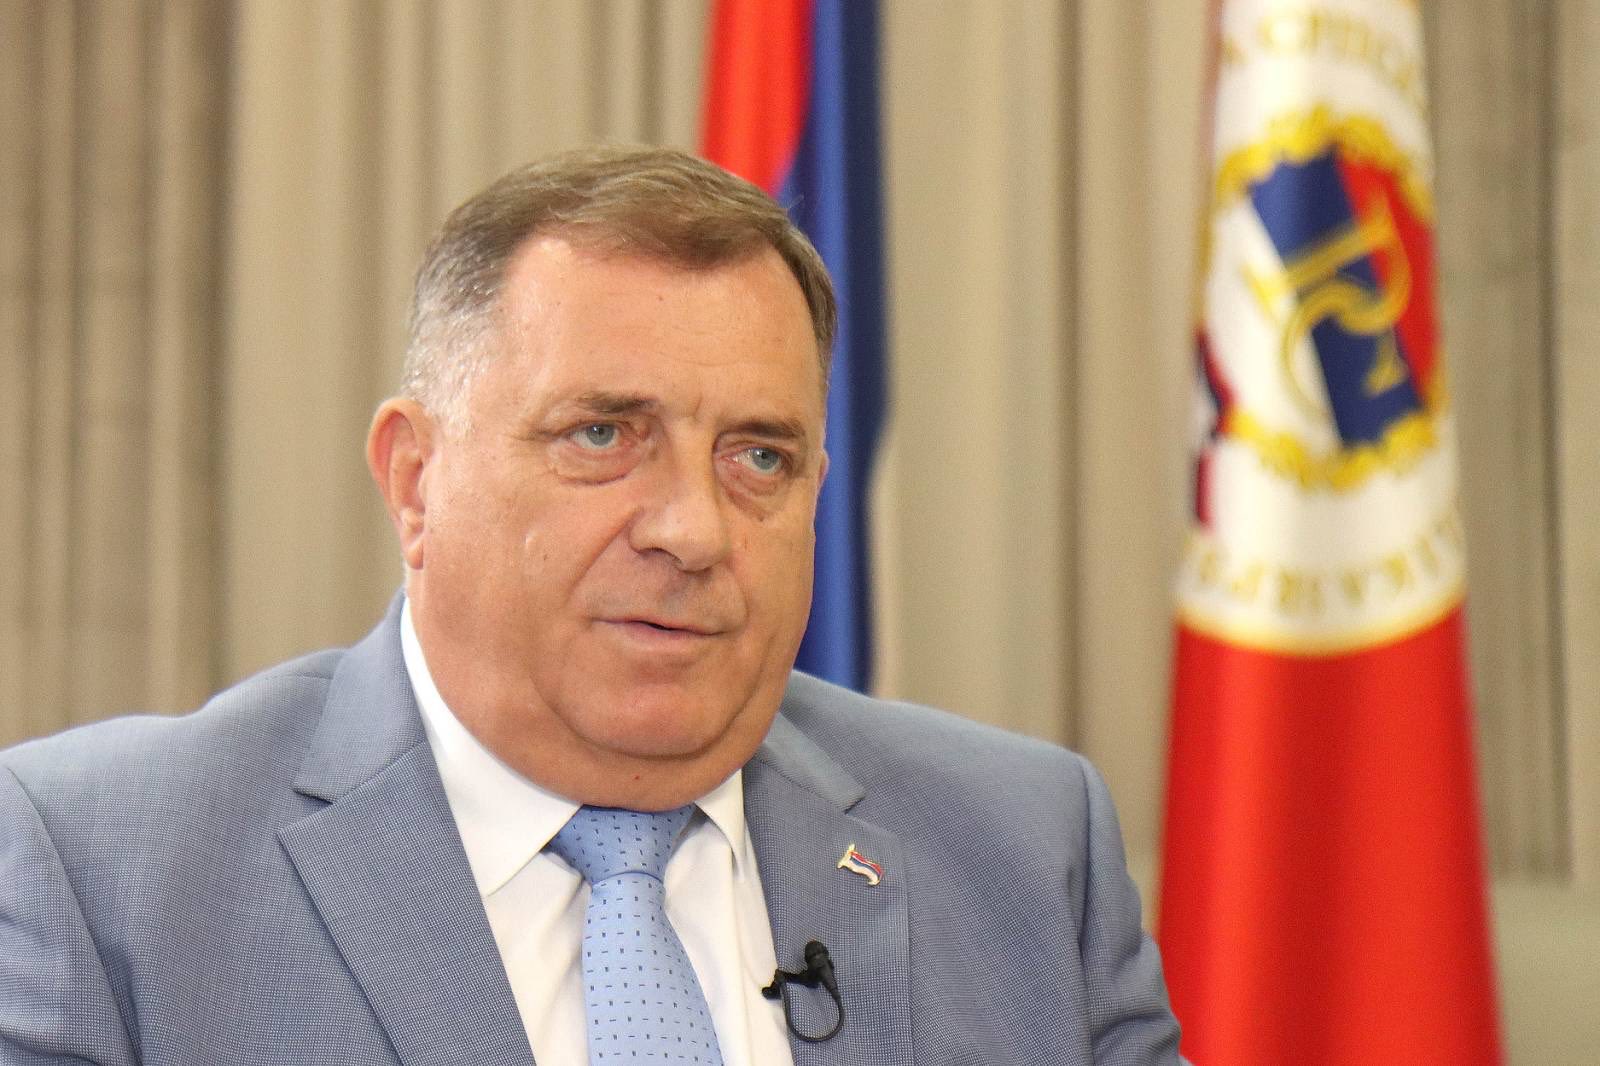 Milorad Dodik Calls For An End To International Interventionism In Bosnia